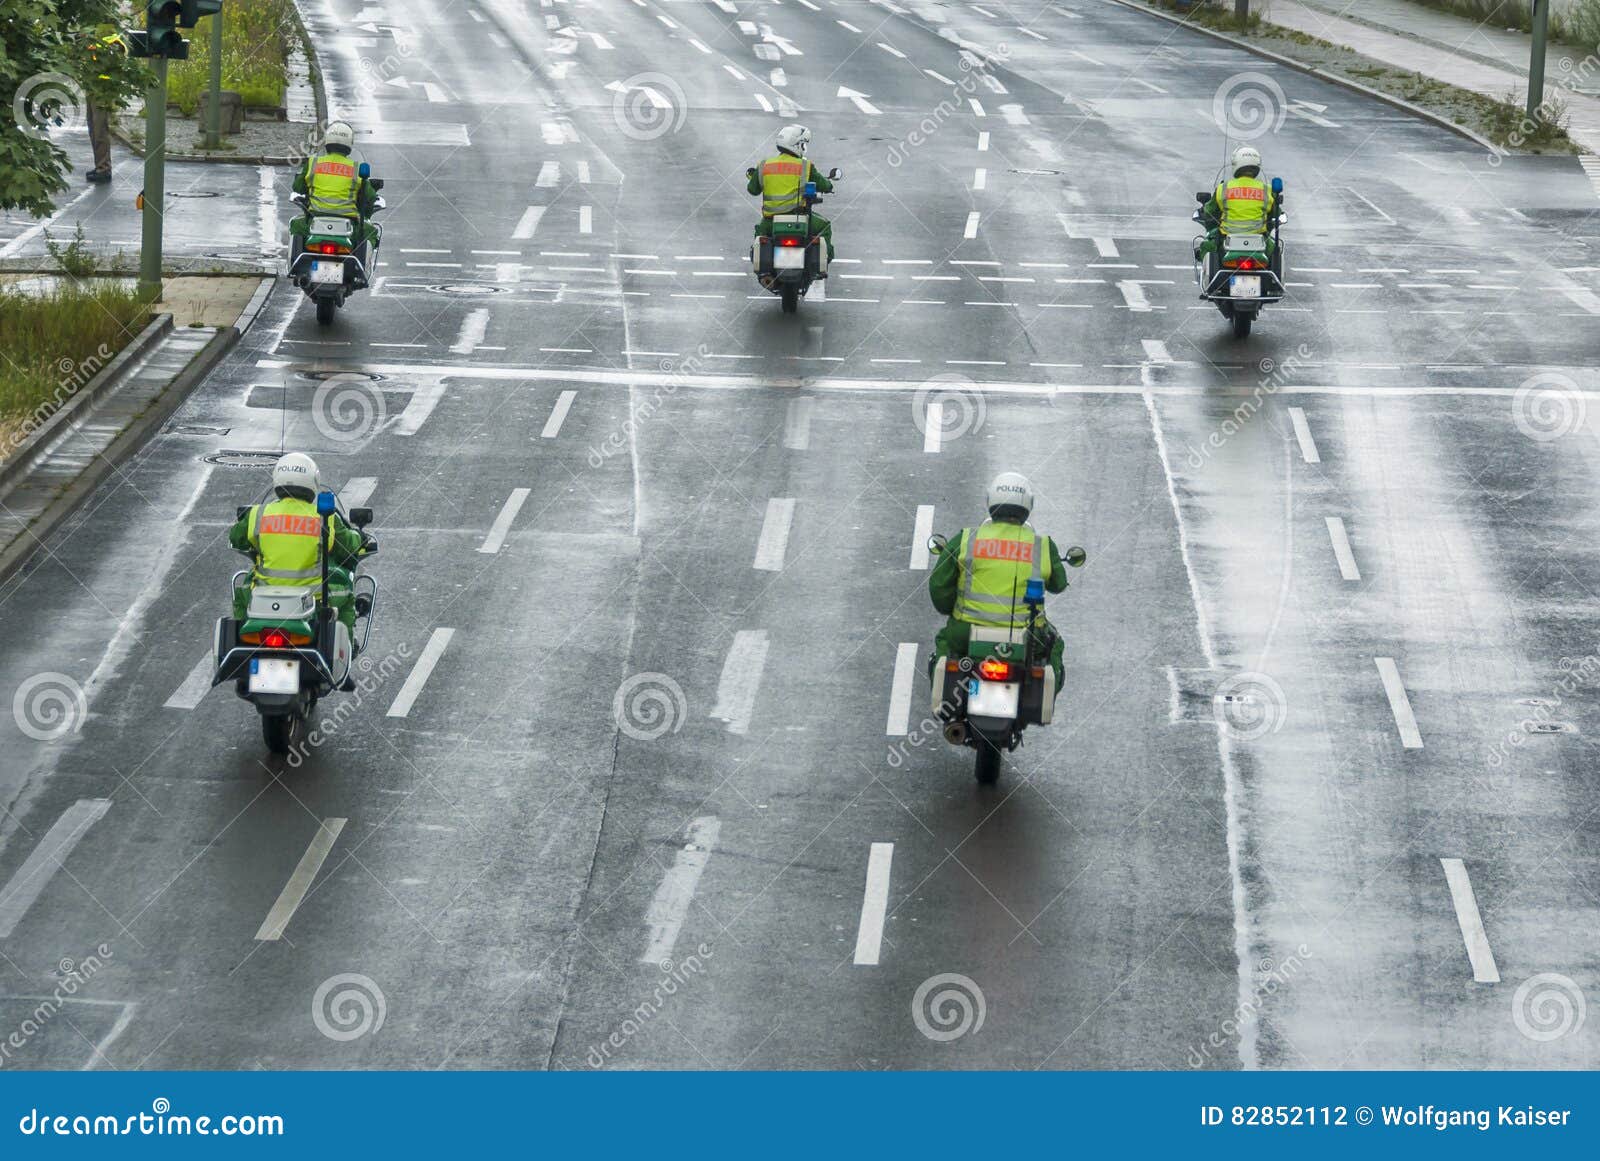 police escort with motorbikes